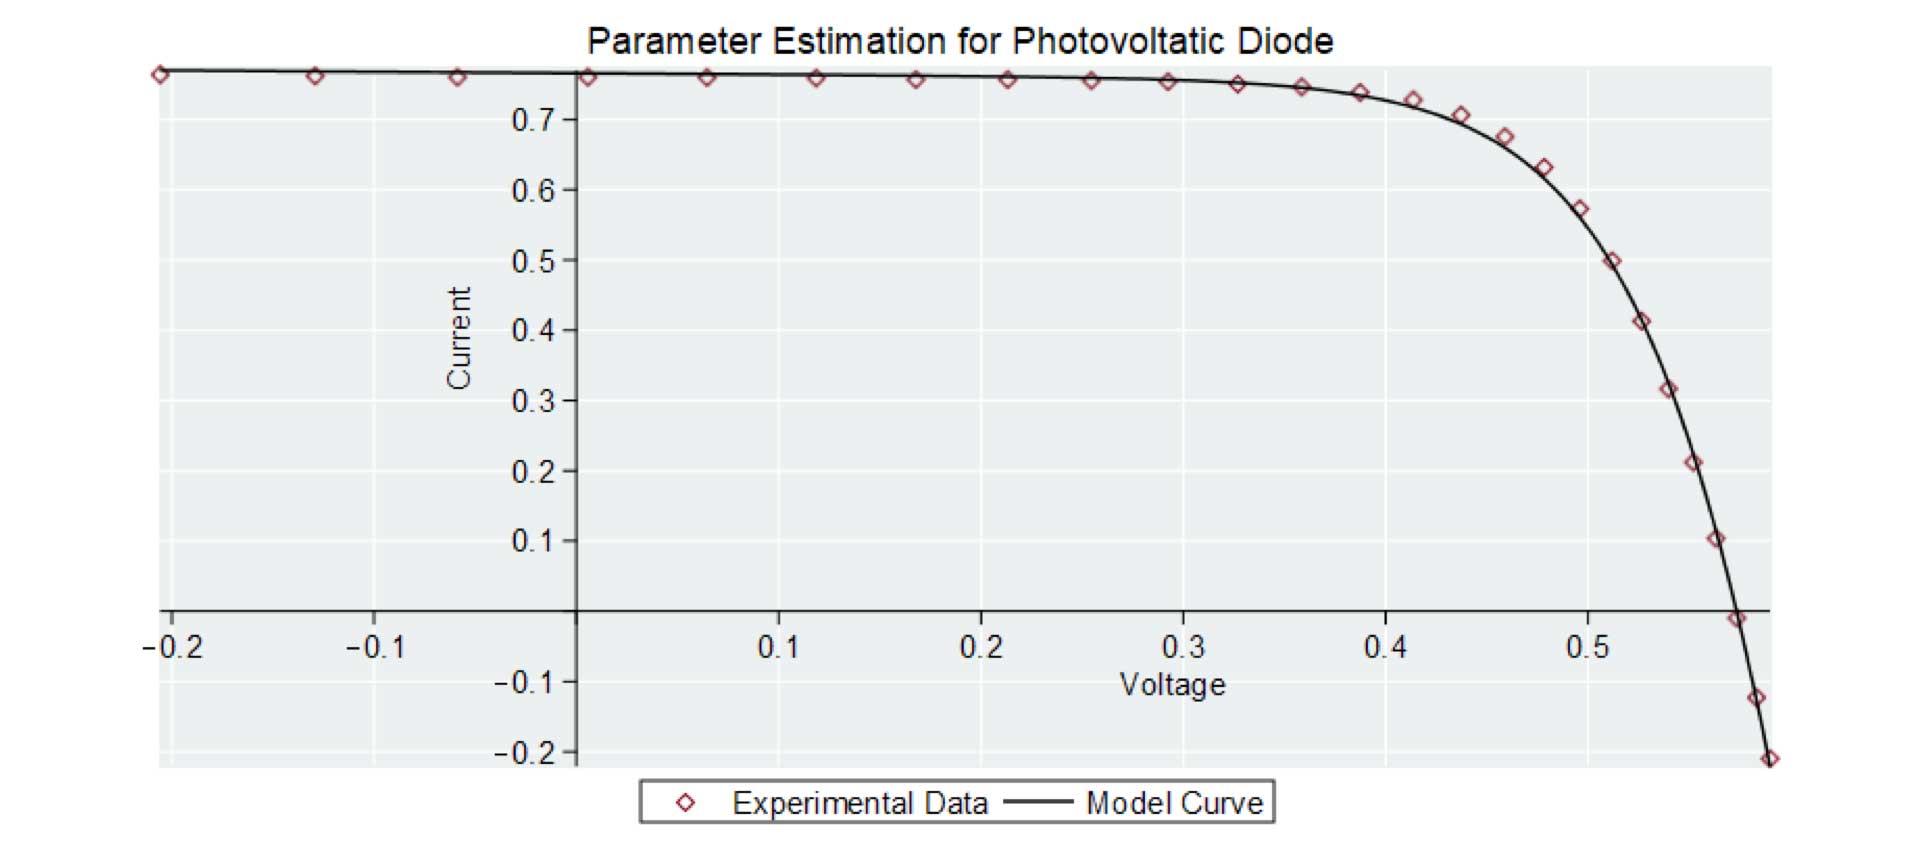 Parameter estimation for a photovoltaic diode